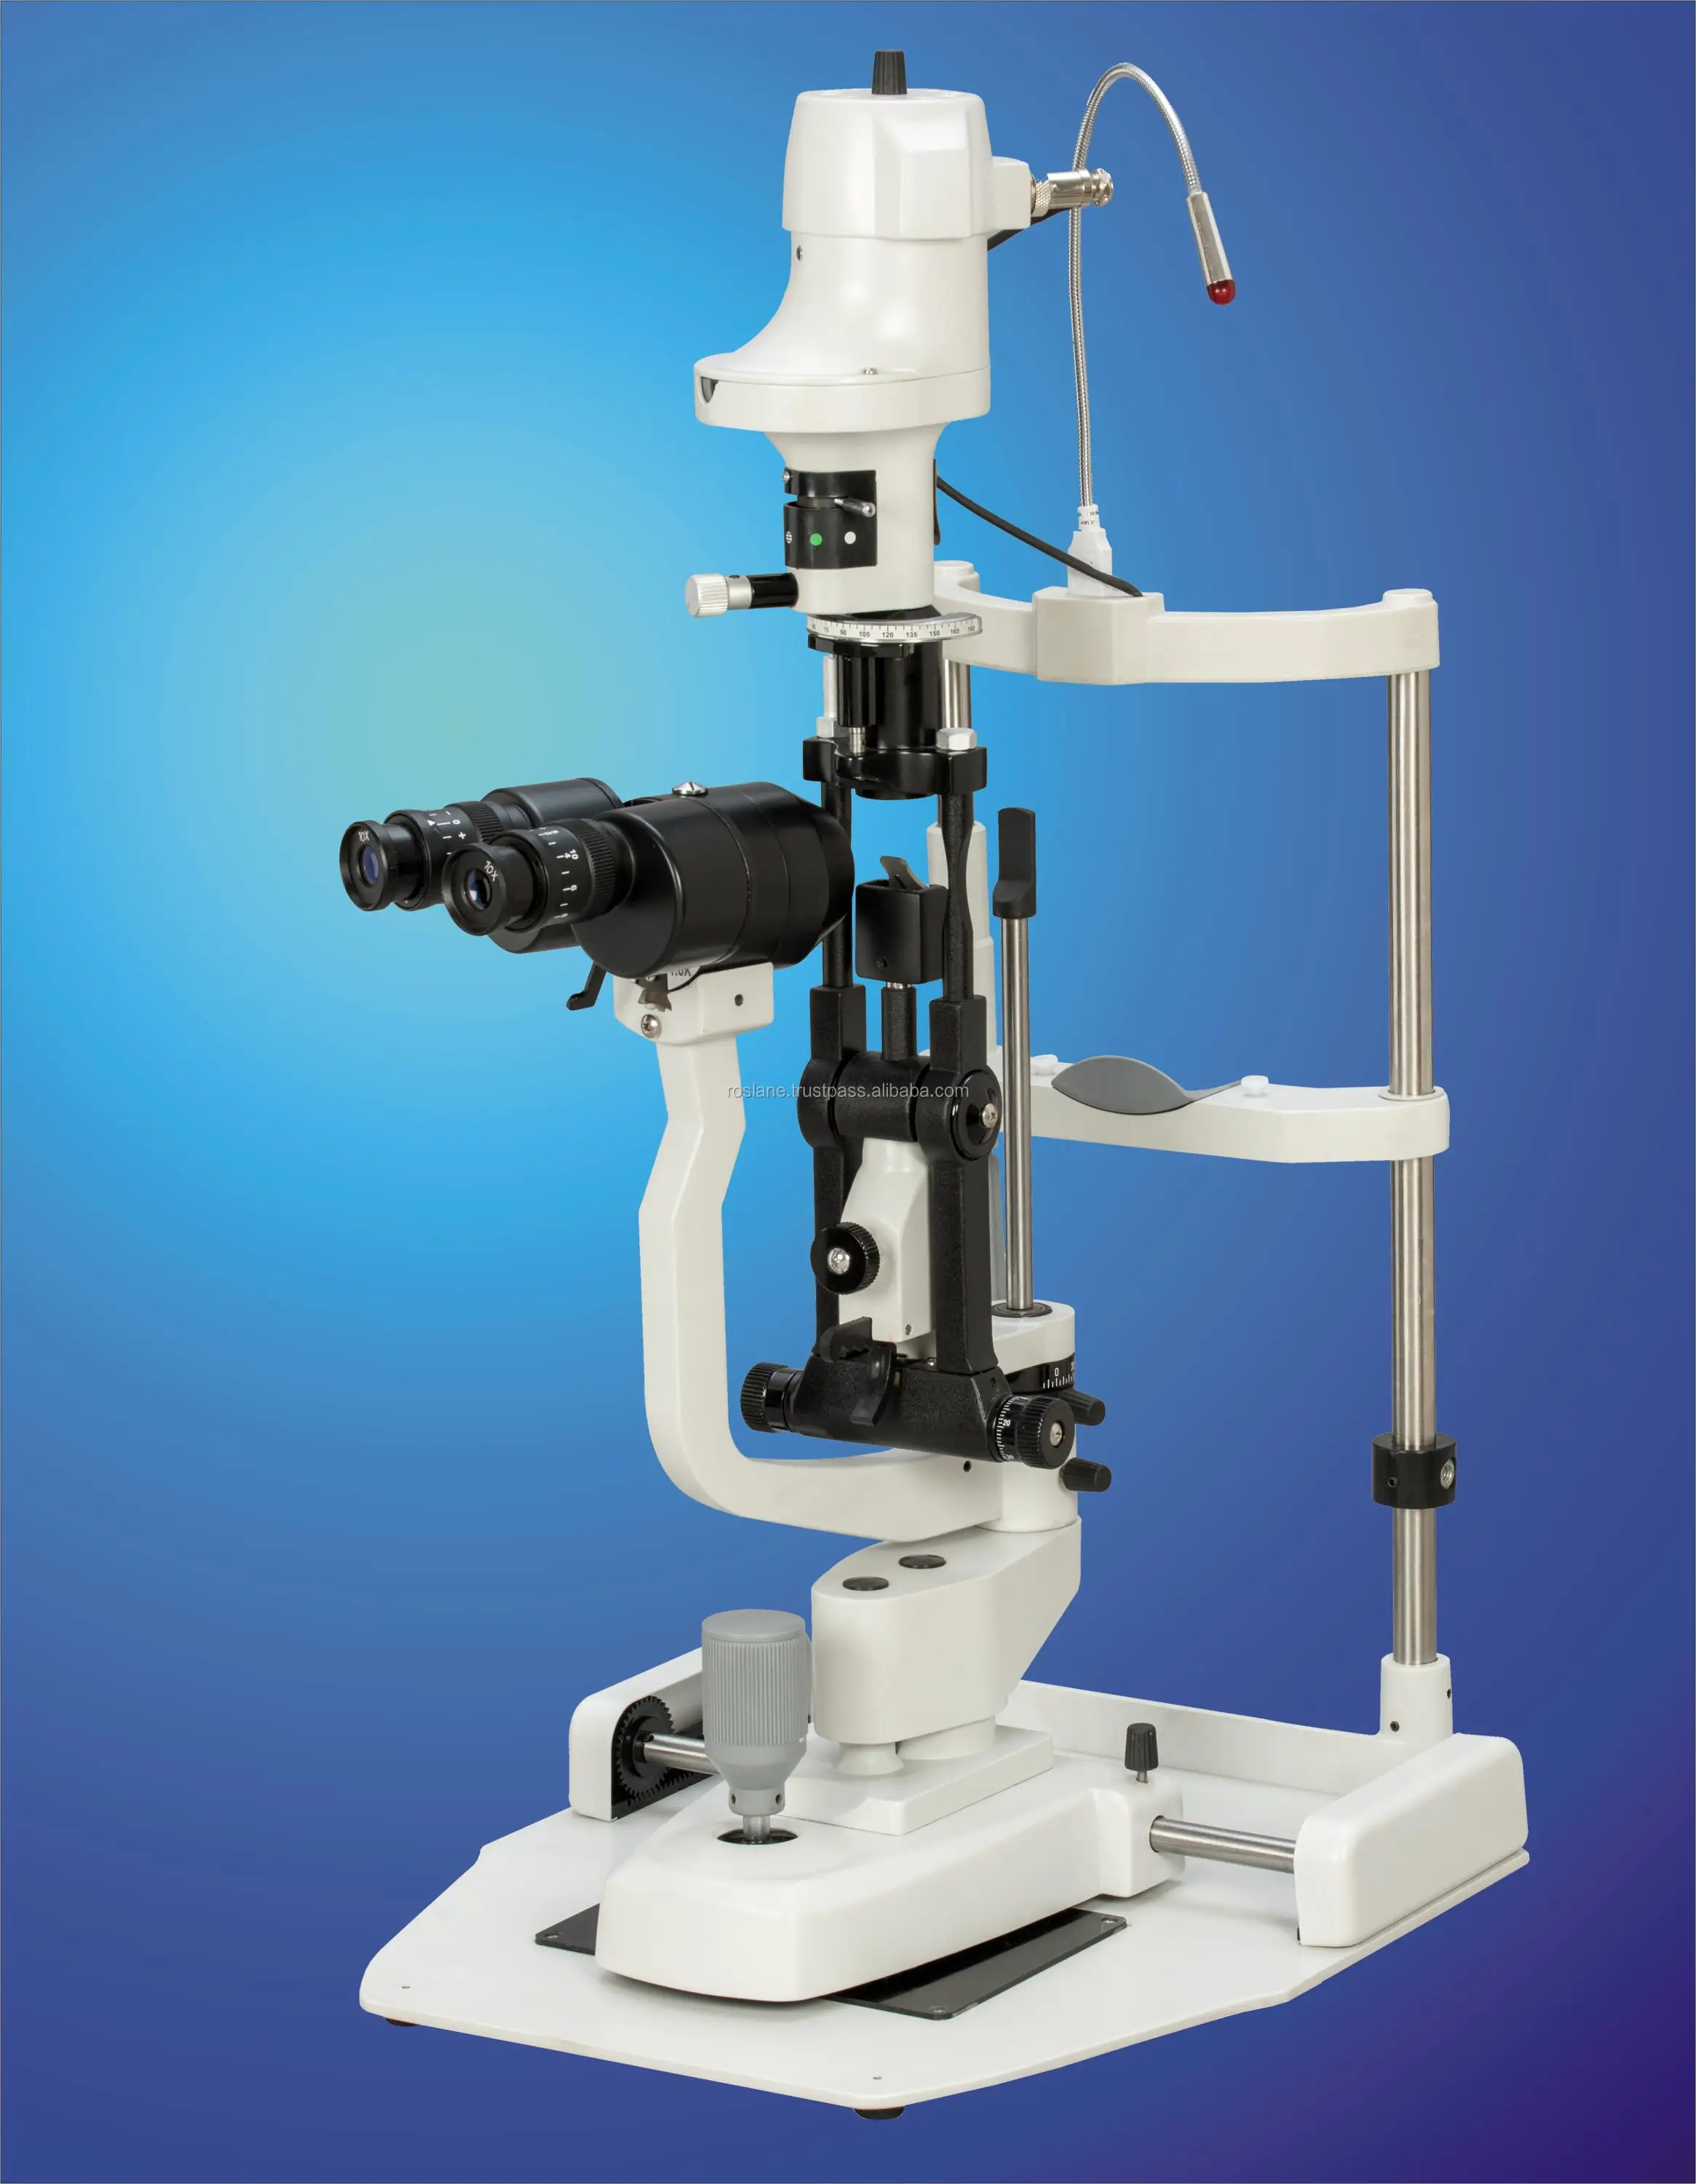 Optical Slit Lamp Microscope With Digital Camera Buy Digital Slit